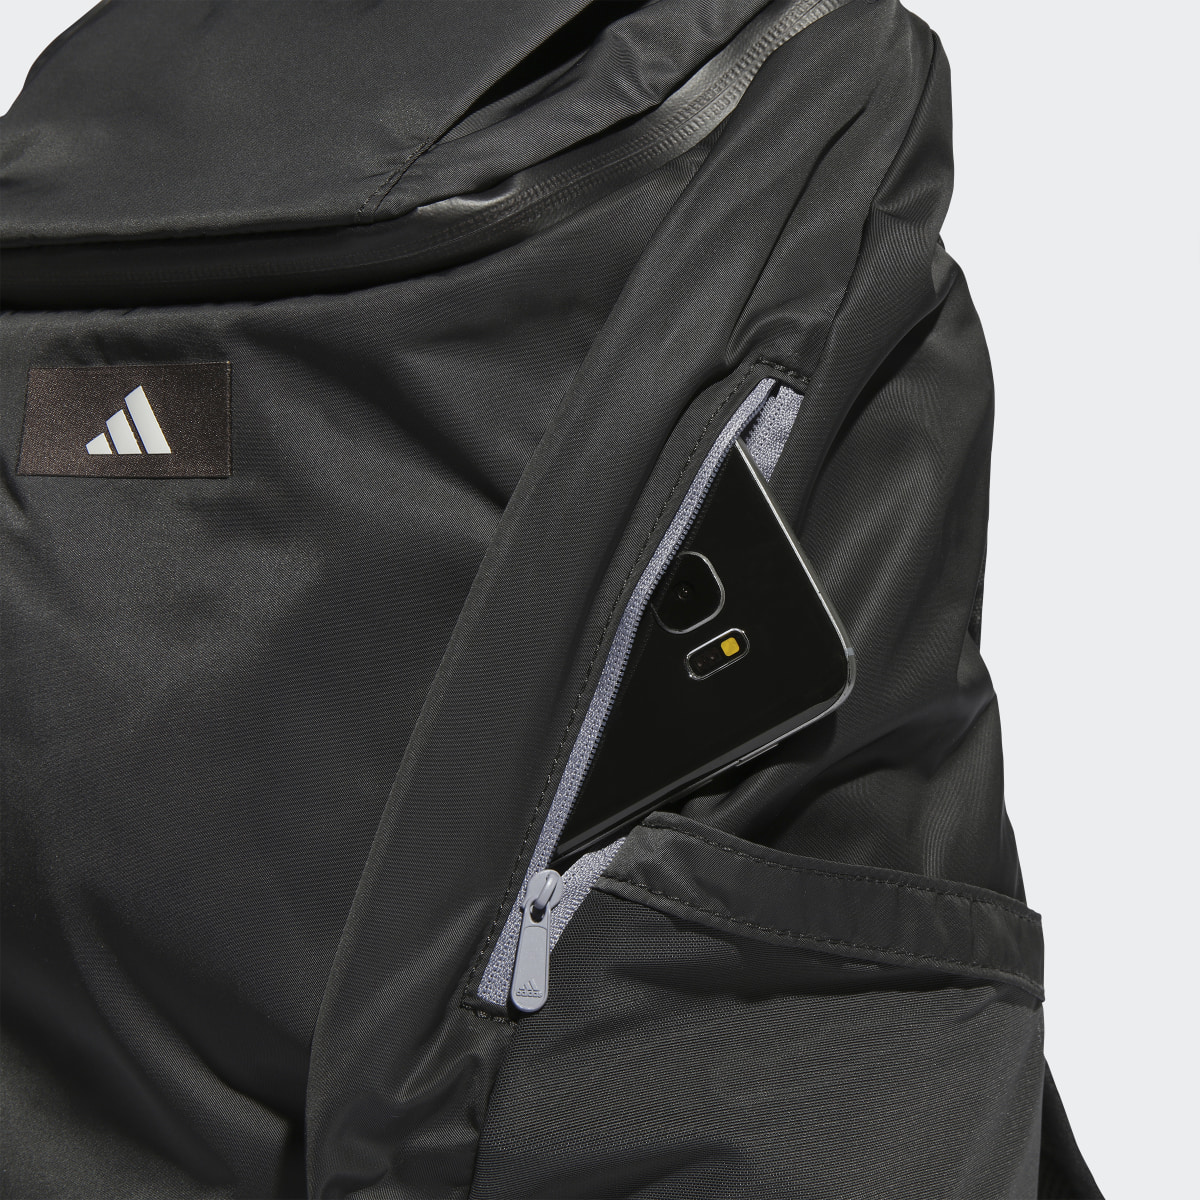 Adidas Designed for Training Gym Backpack. 6